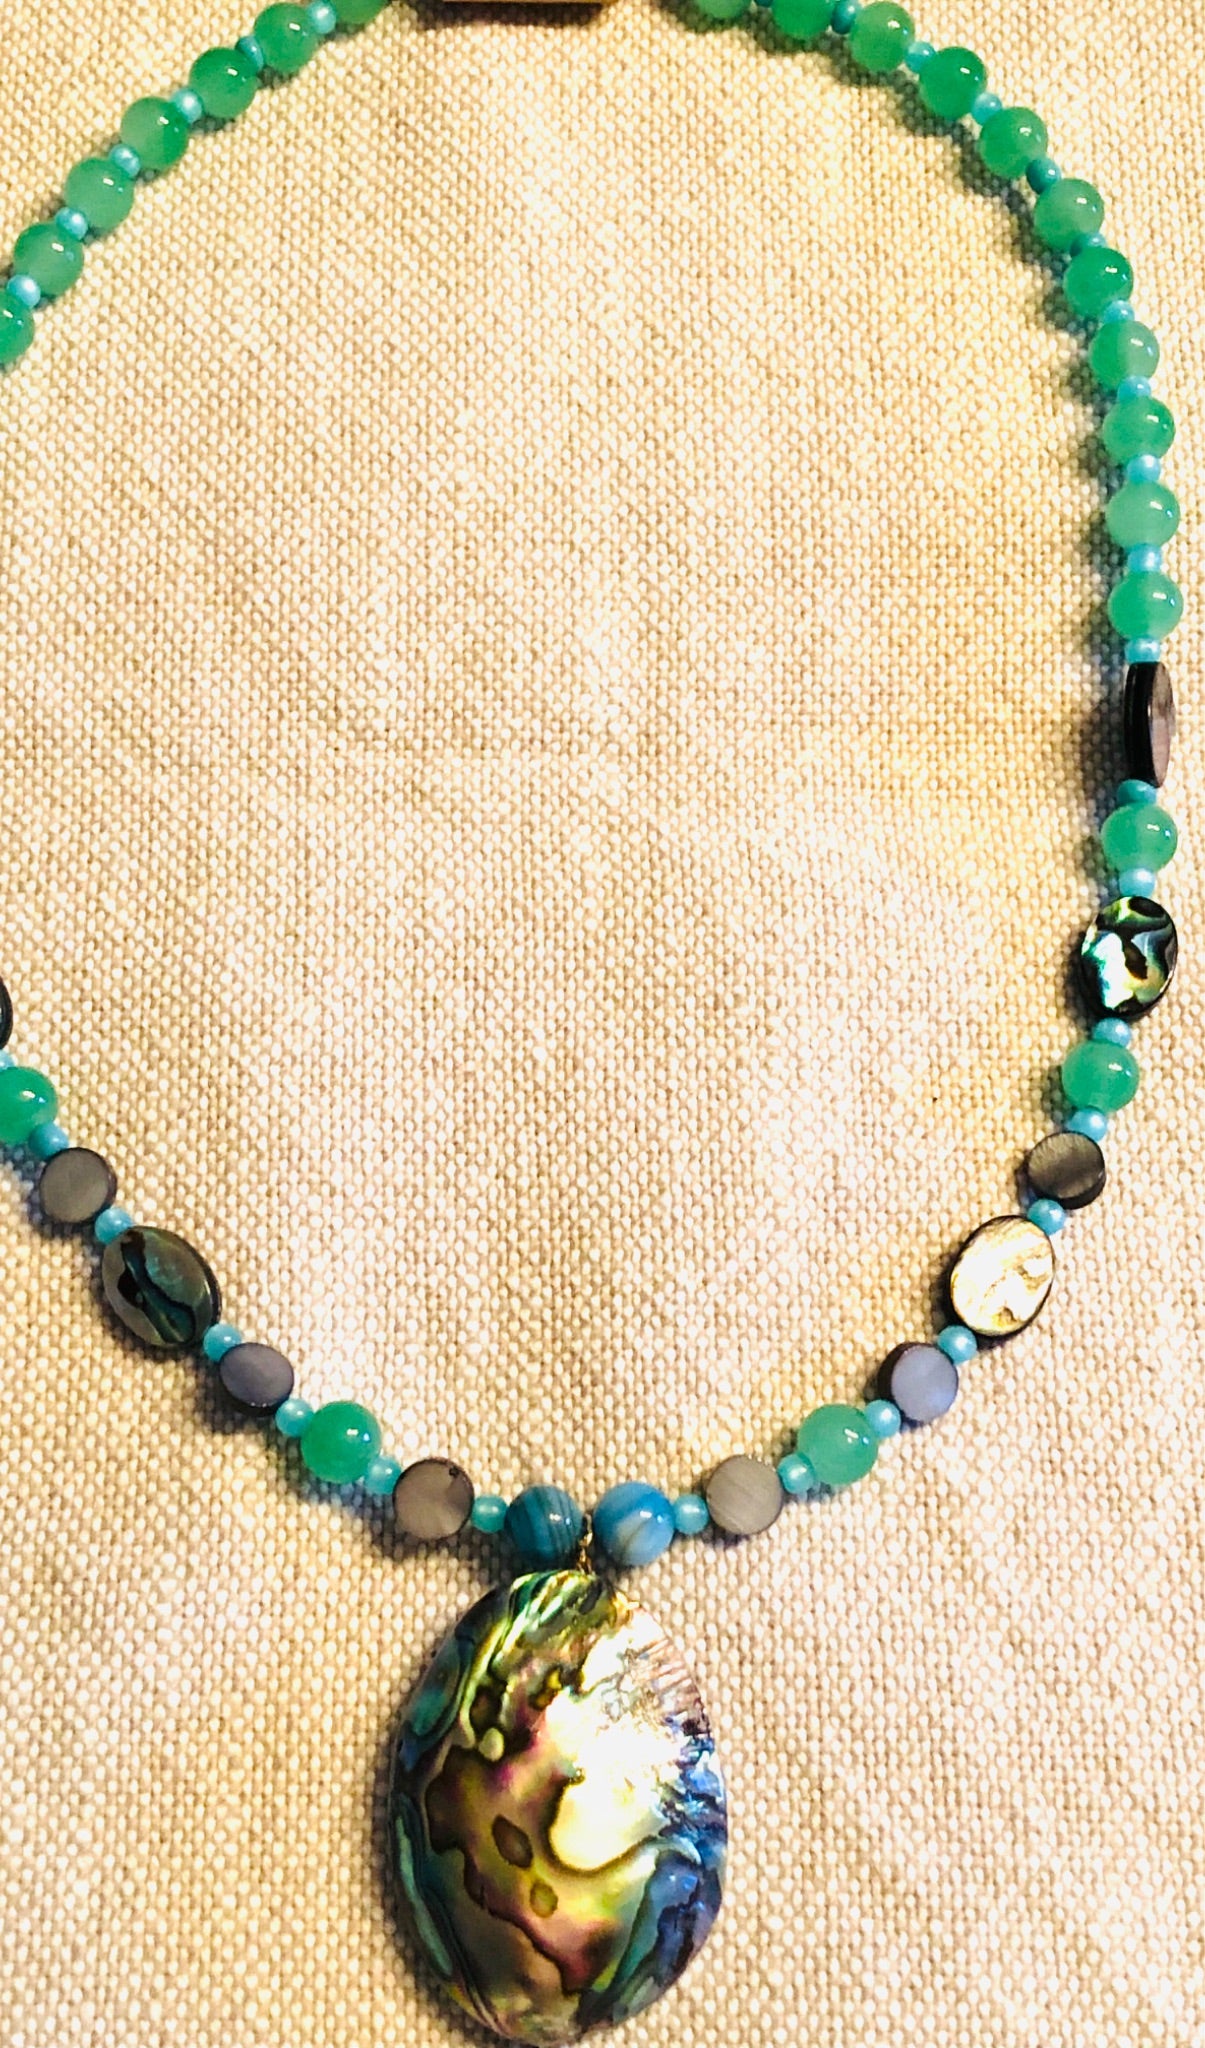 015-148 Abalone Shell & Green Glass Beads - 1